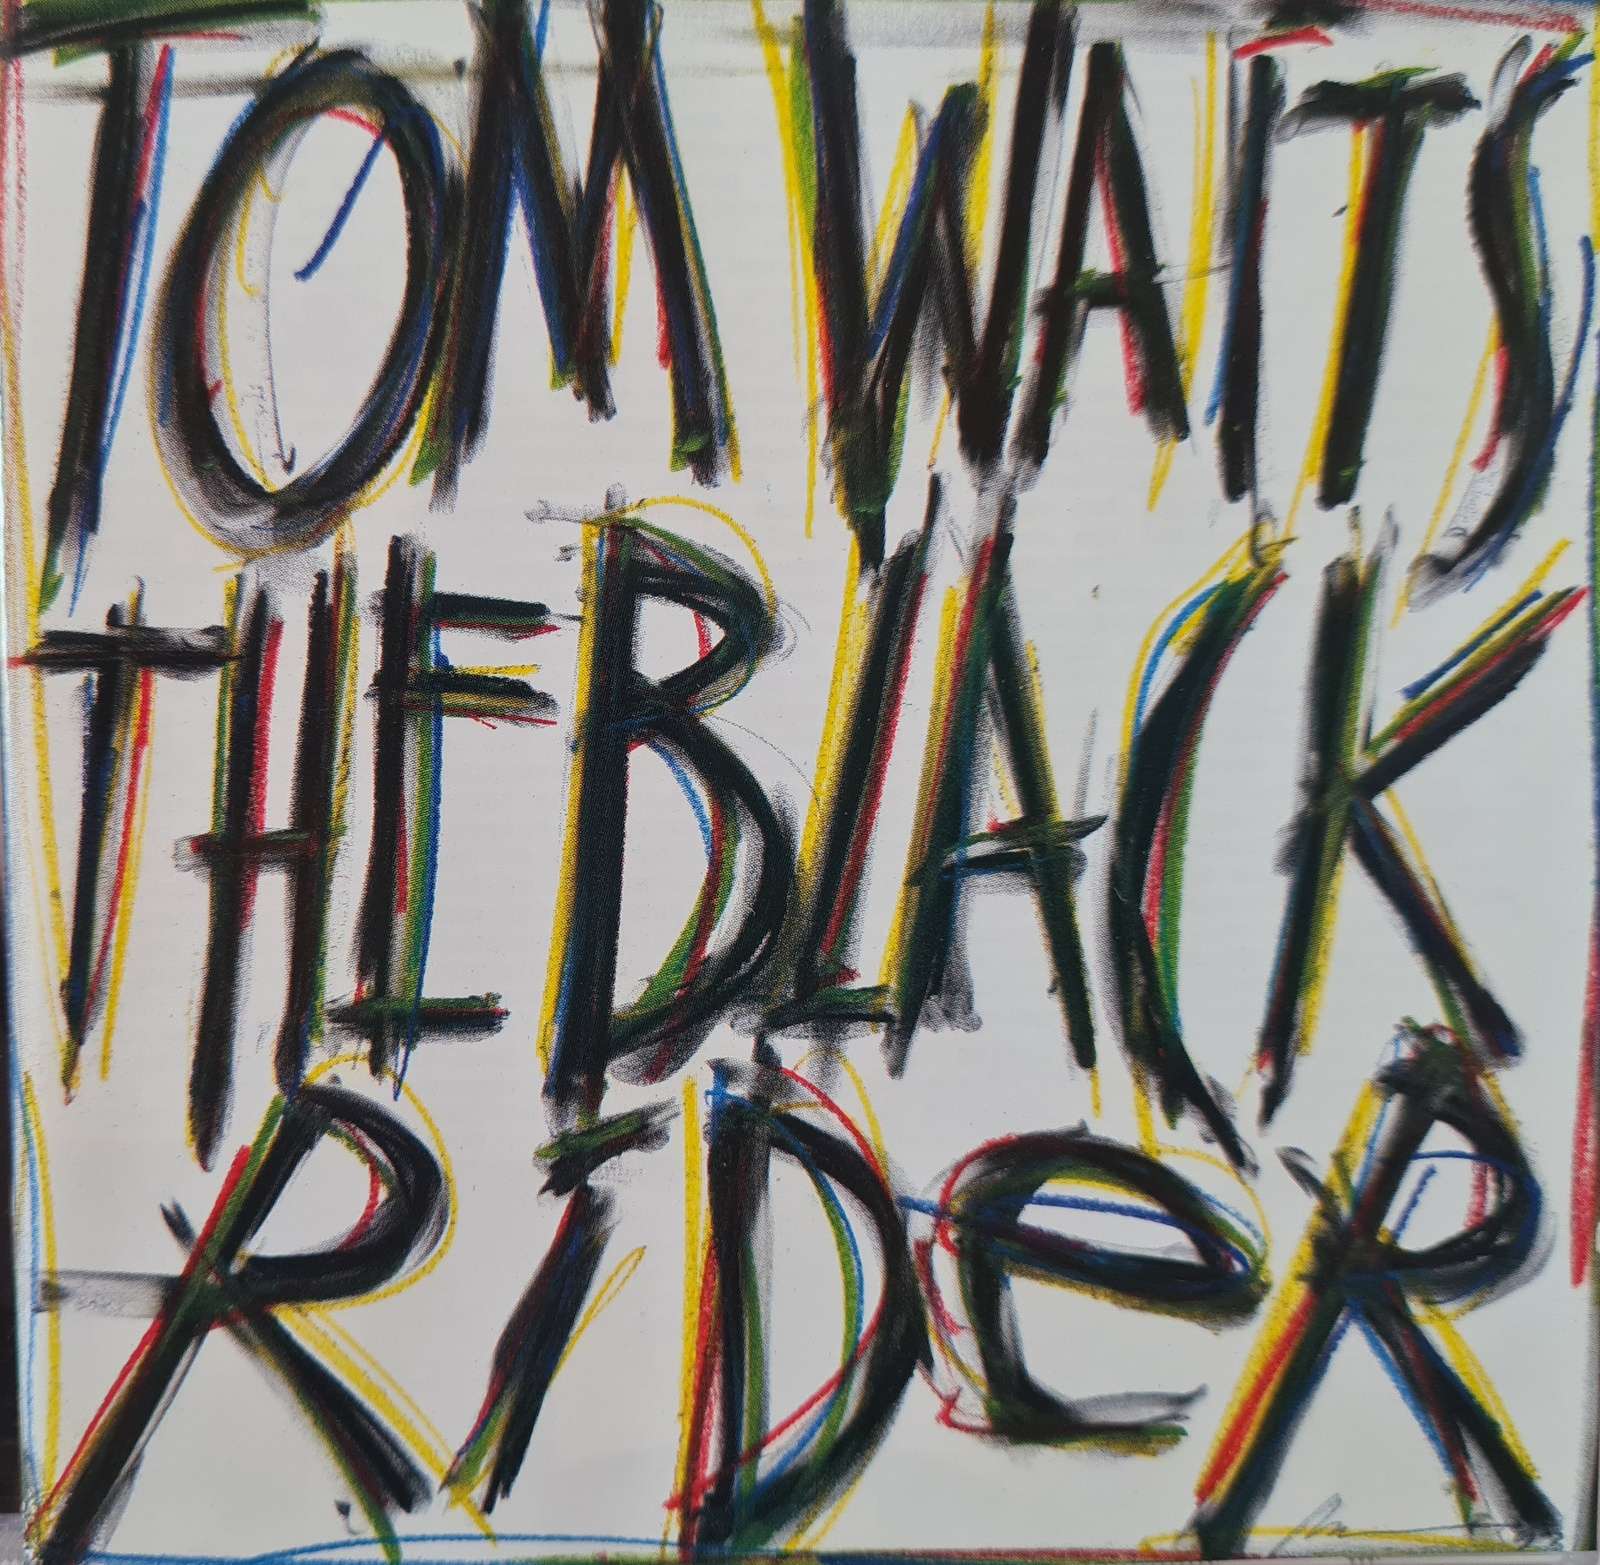 Tom Waits - The Black Rider (CD)